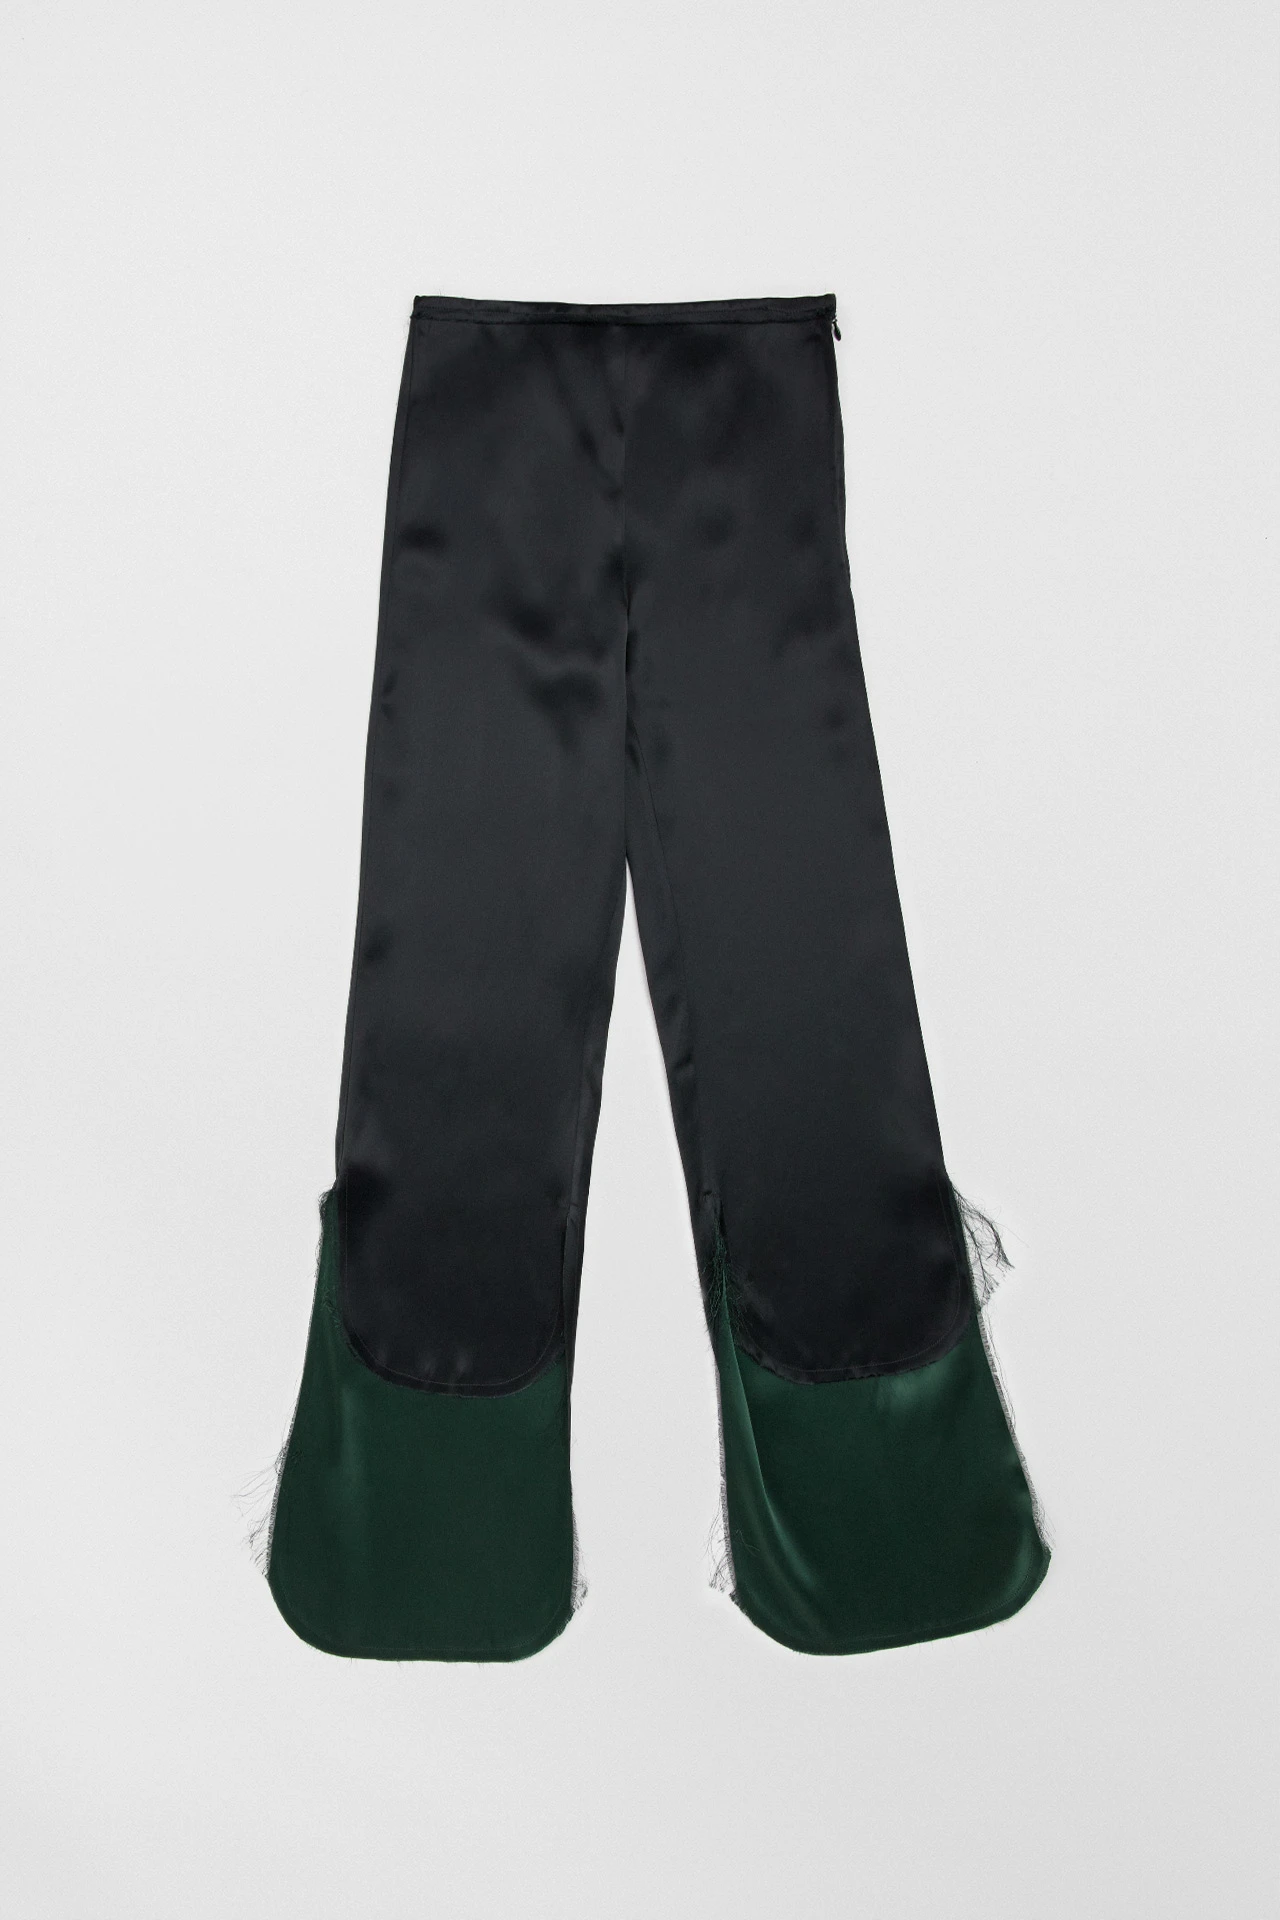 Miista-ball-black-forest-trousers-01